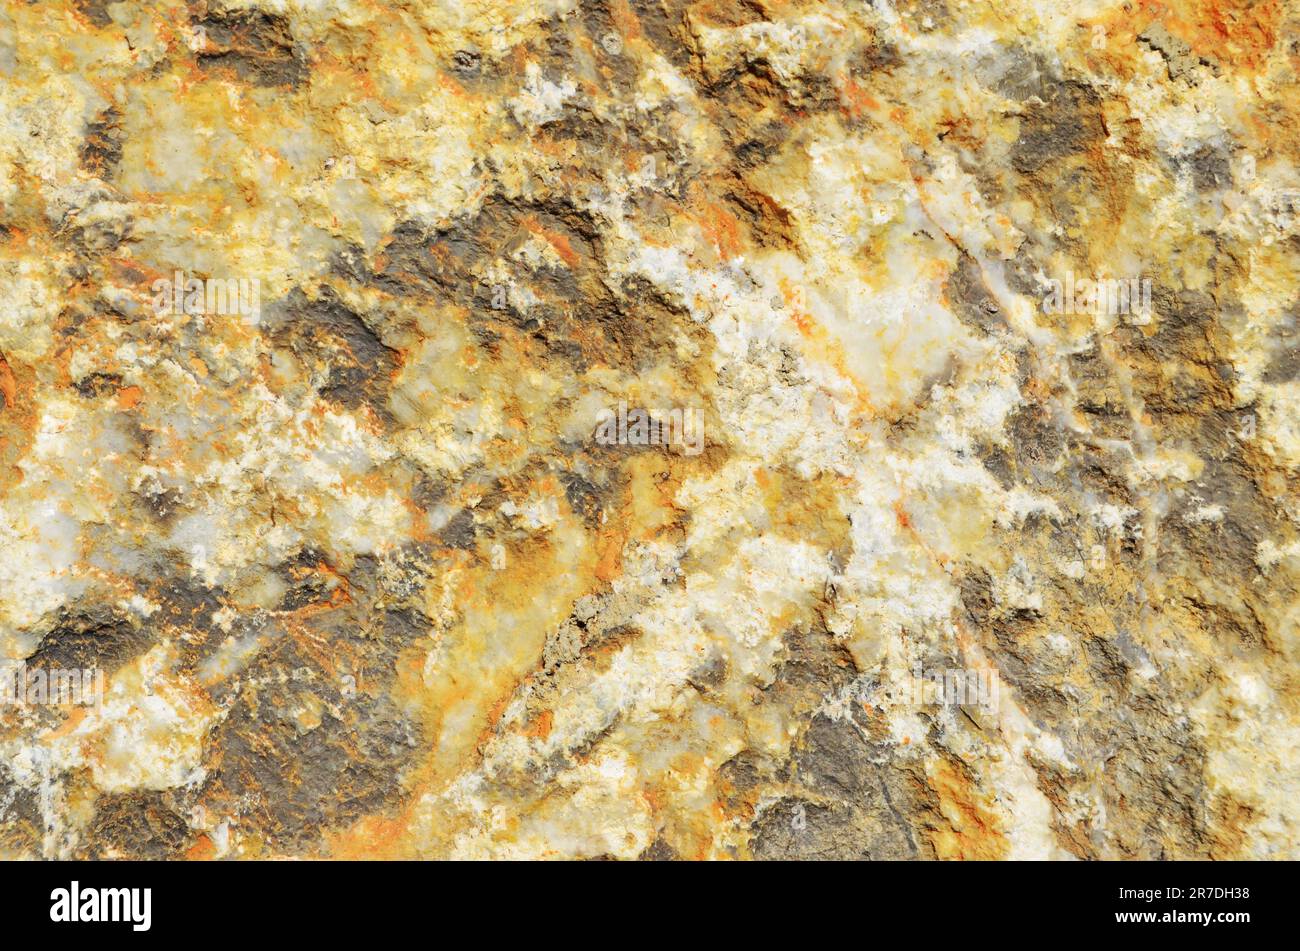 underground precious stones and minerals close-up Stock Photo